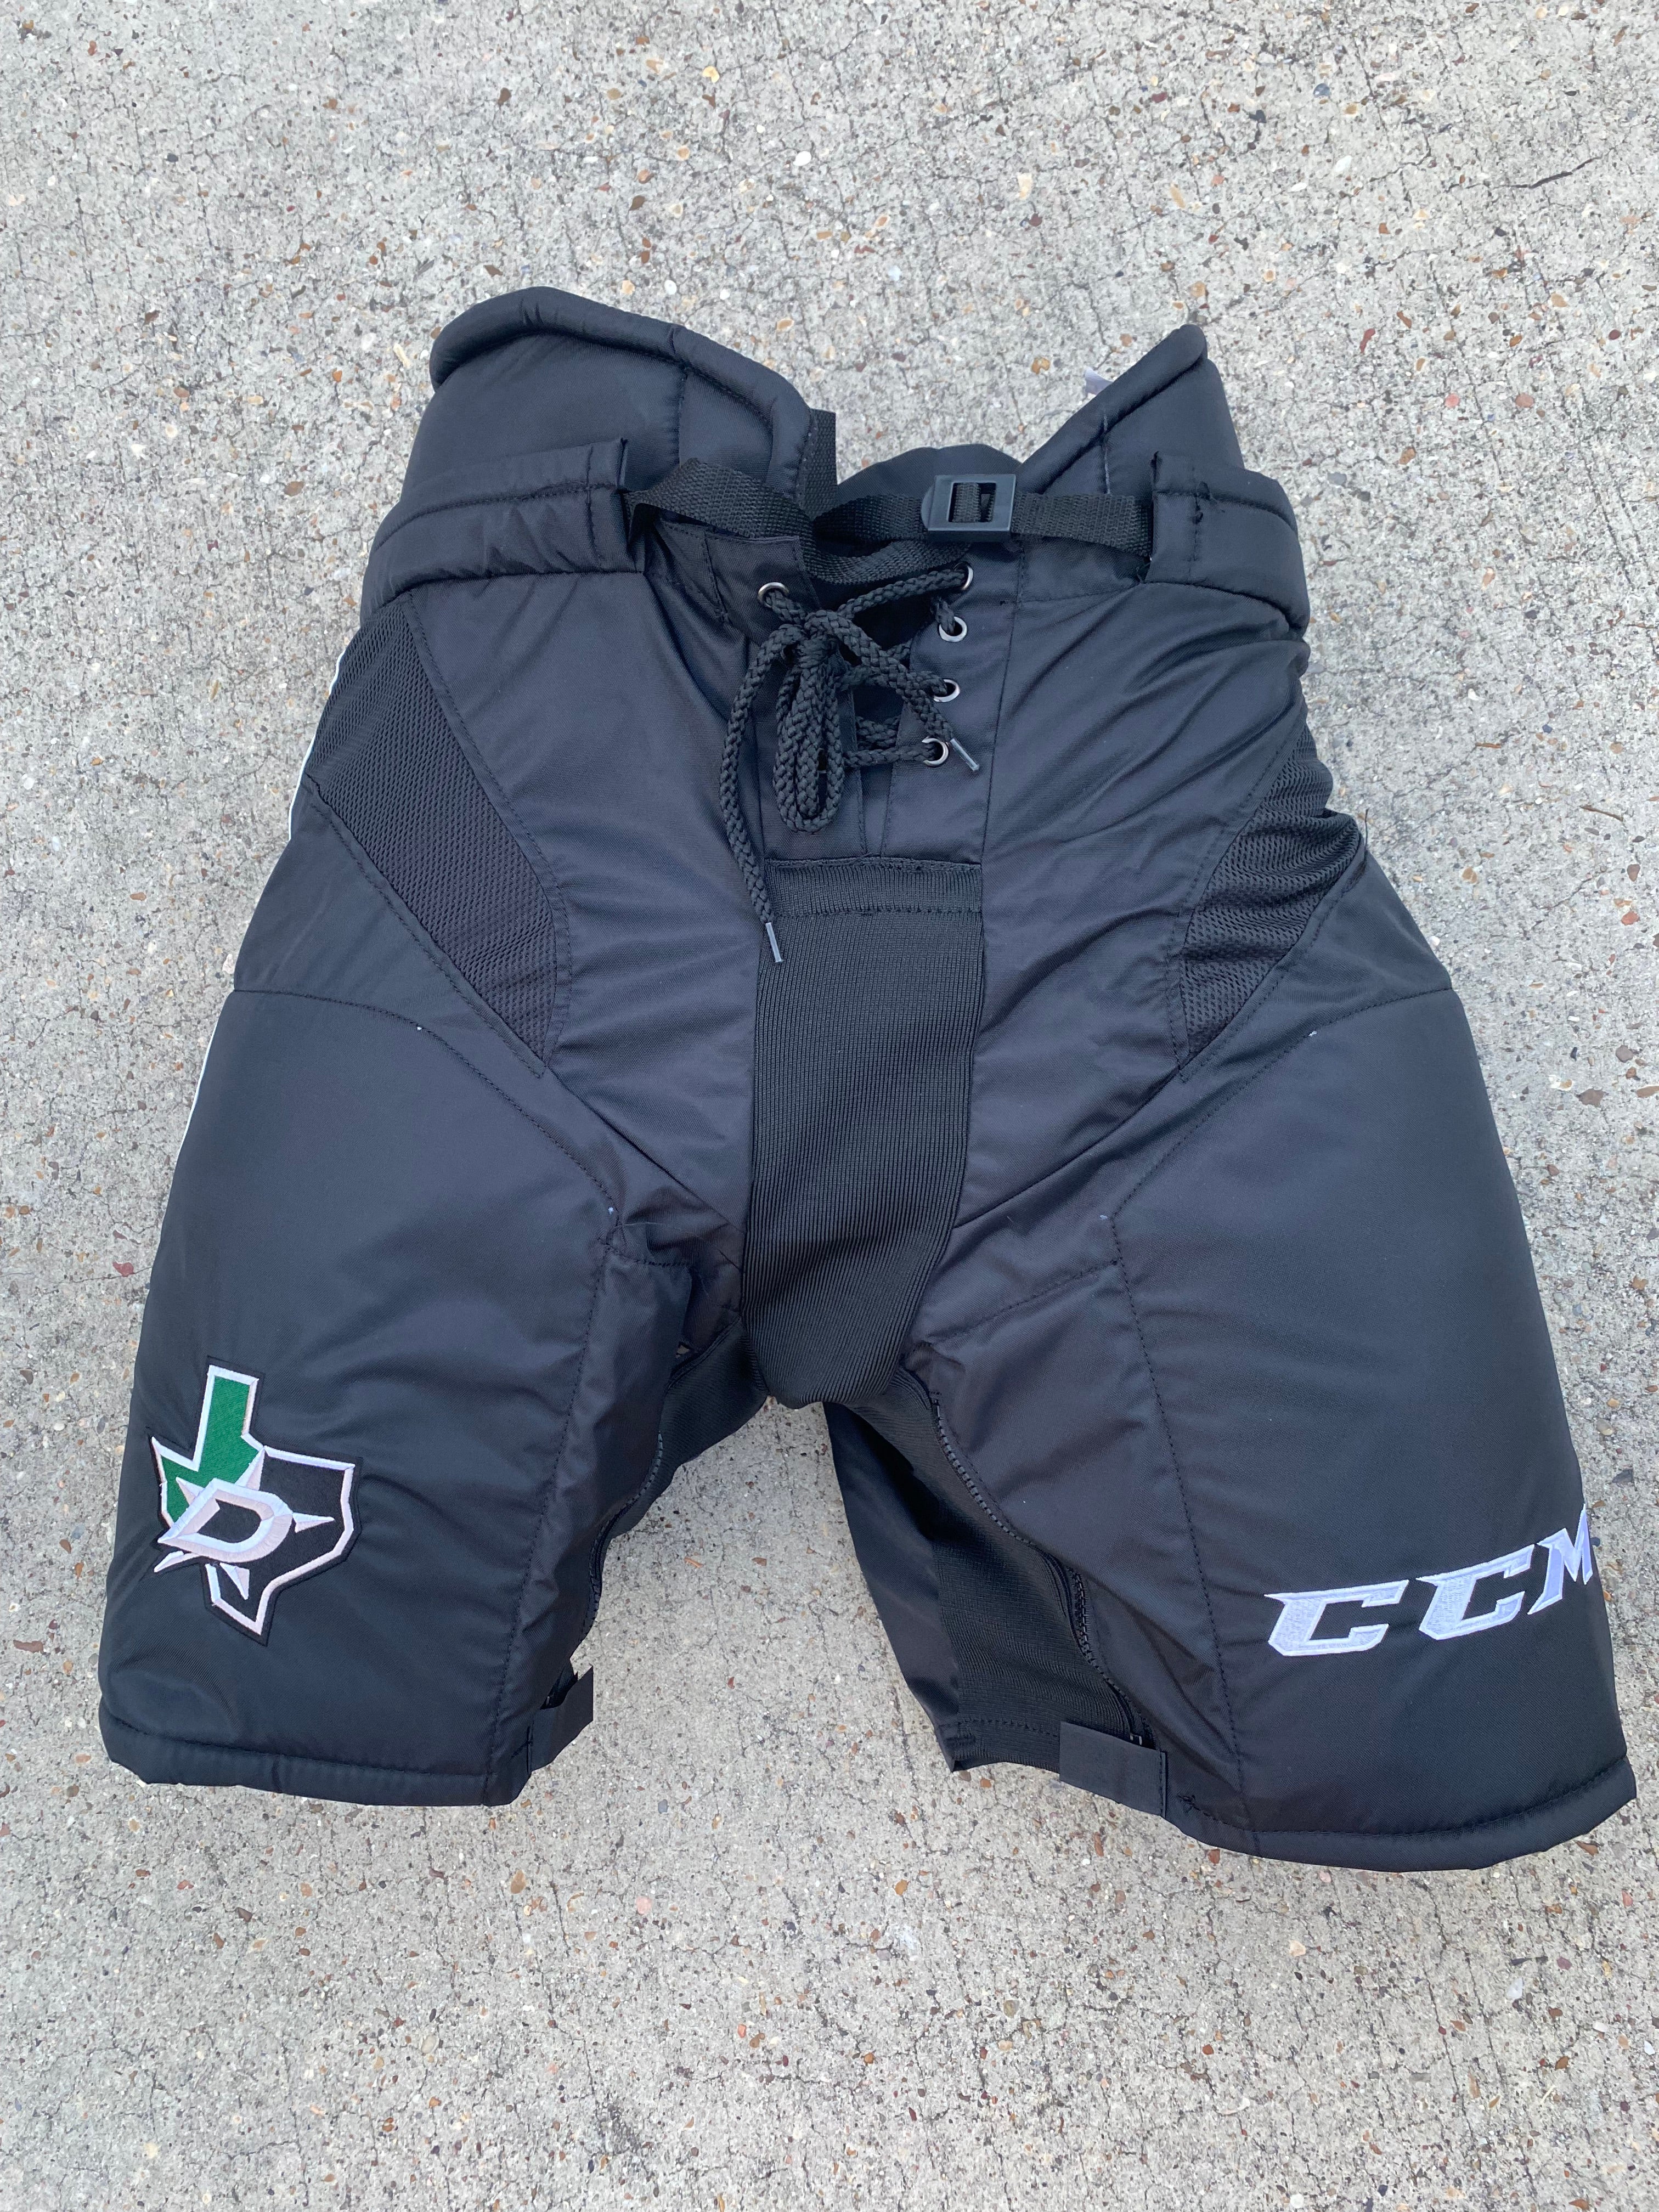 NEW CCM UCLX Pro Stock Hockey Pants Medium Black AVALANCHE 9187 